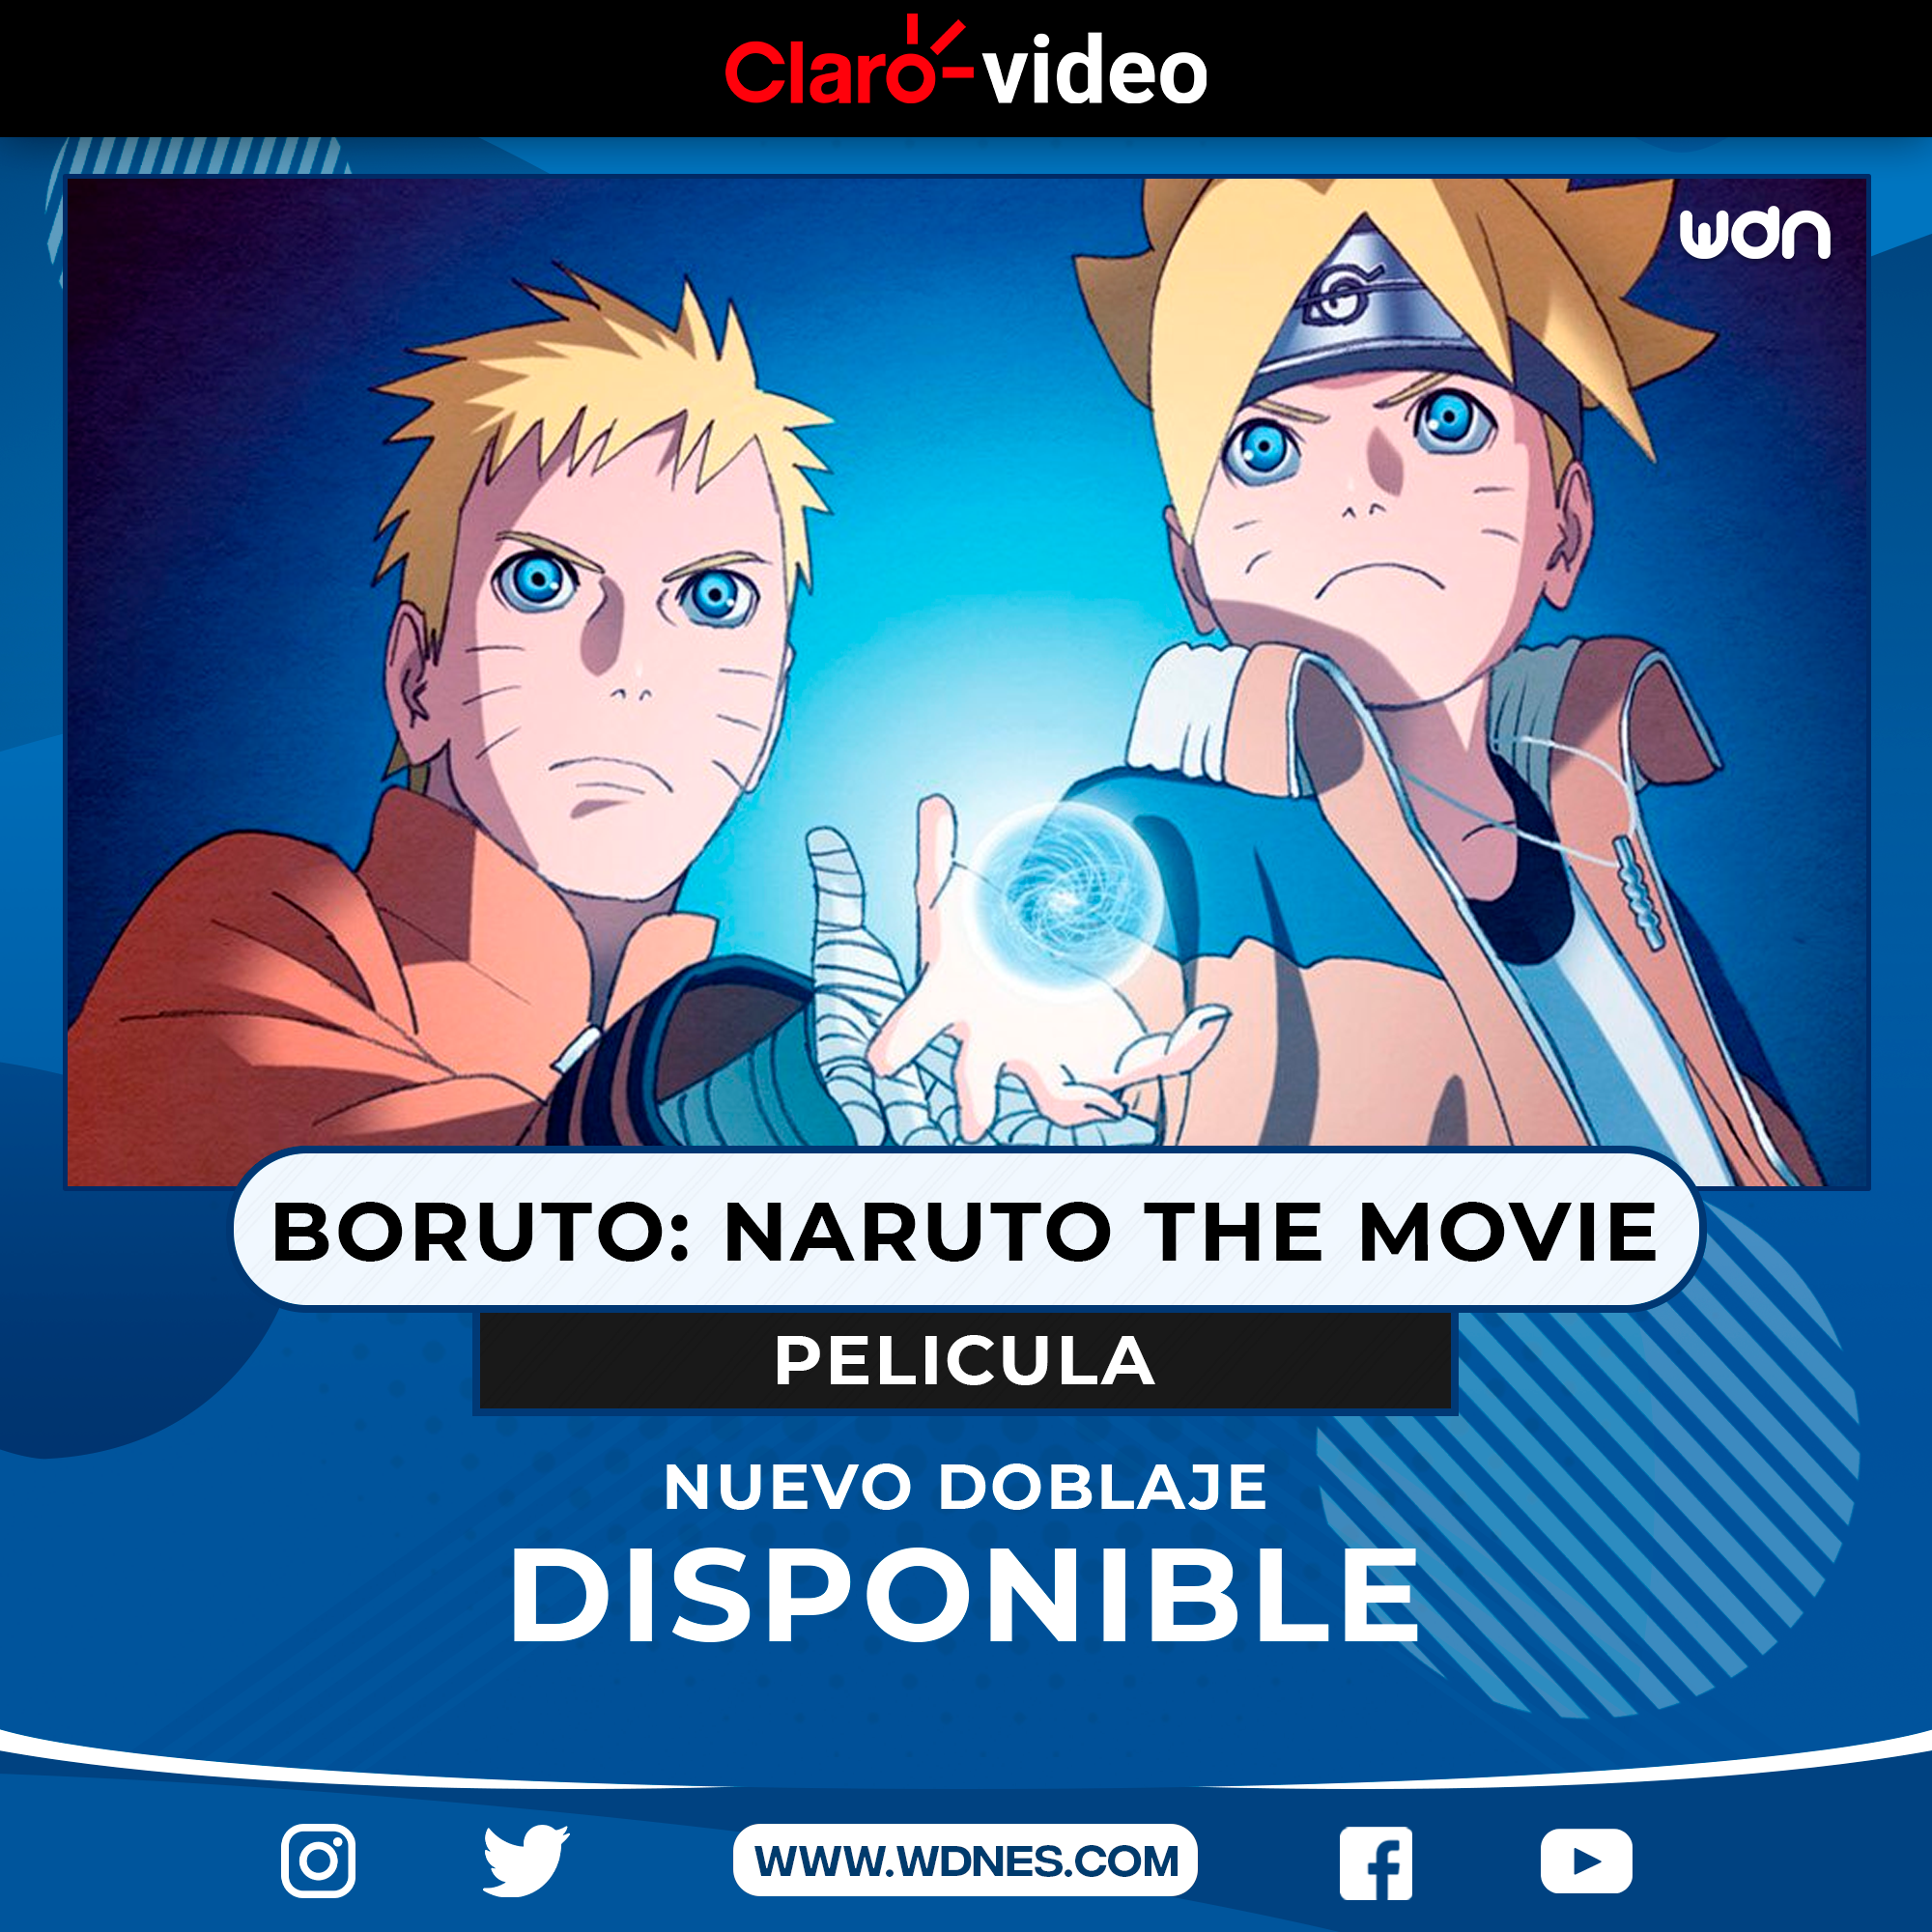 Naruto: Películas llegan con doblaje latino a Claro Video